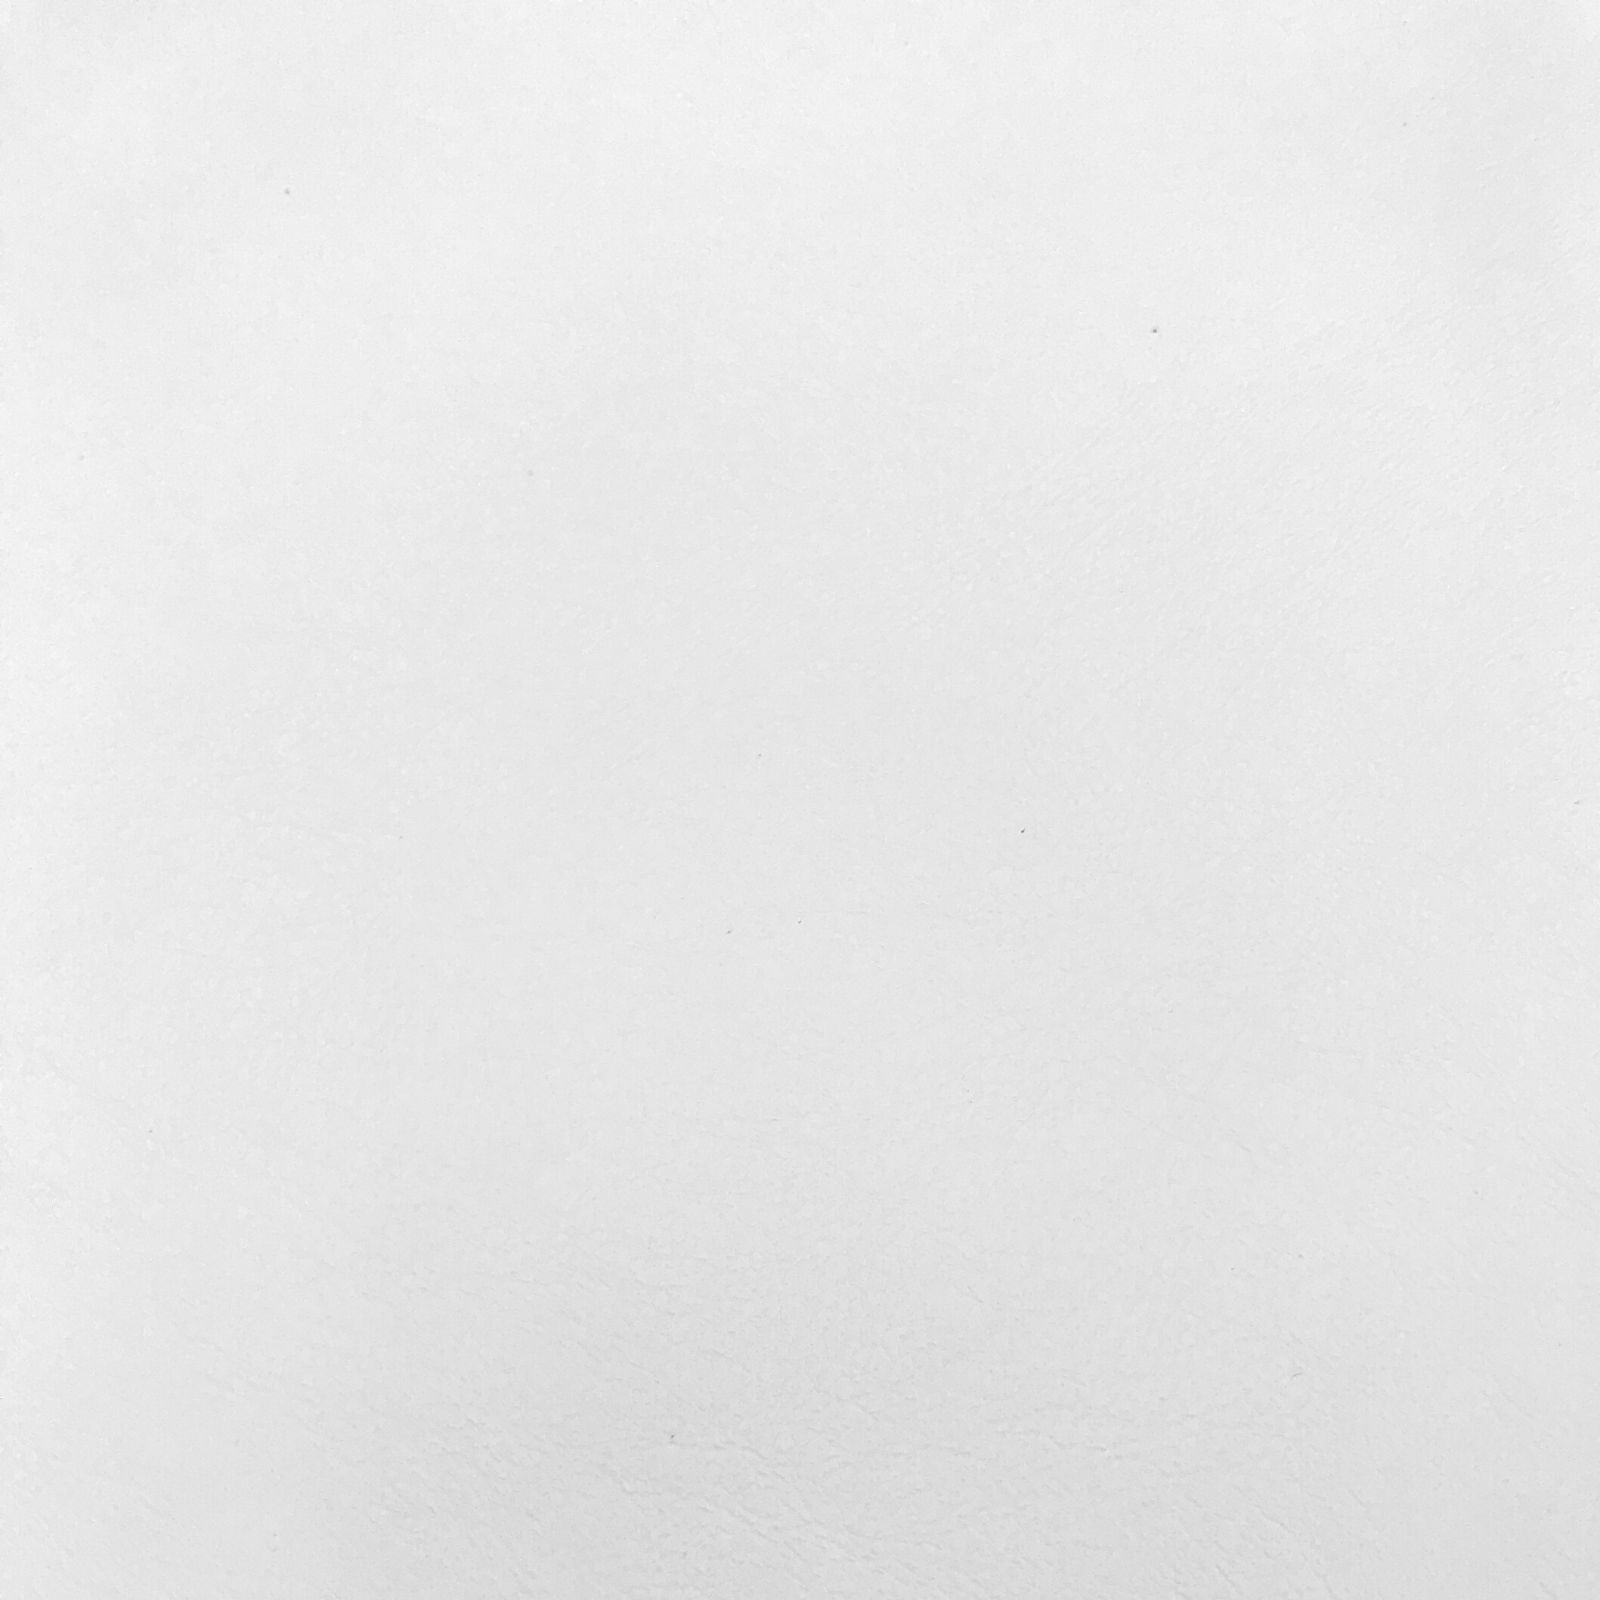 Échantillon Simili Cuir 025 - 9 x 11 cm